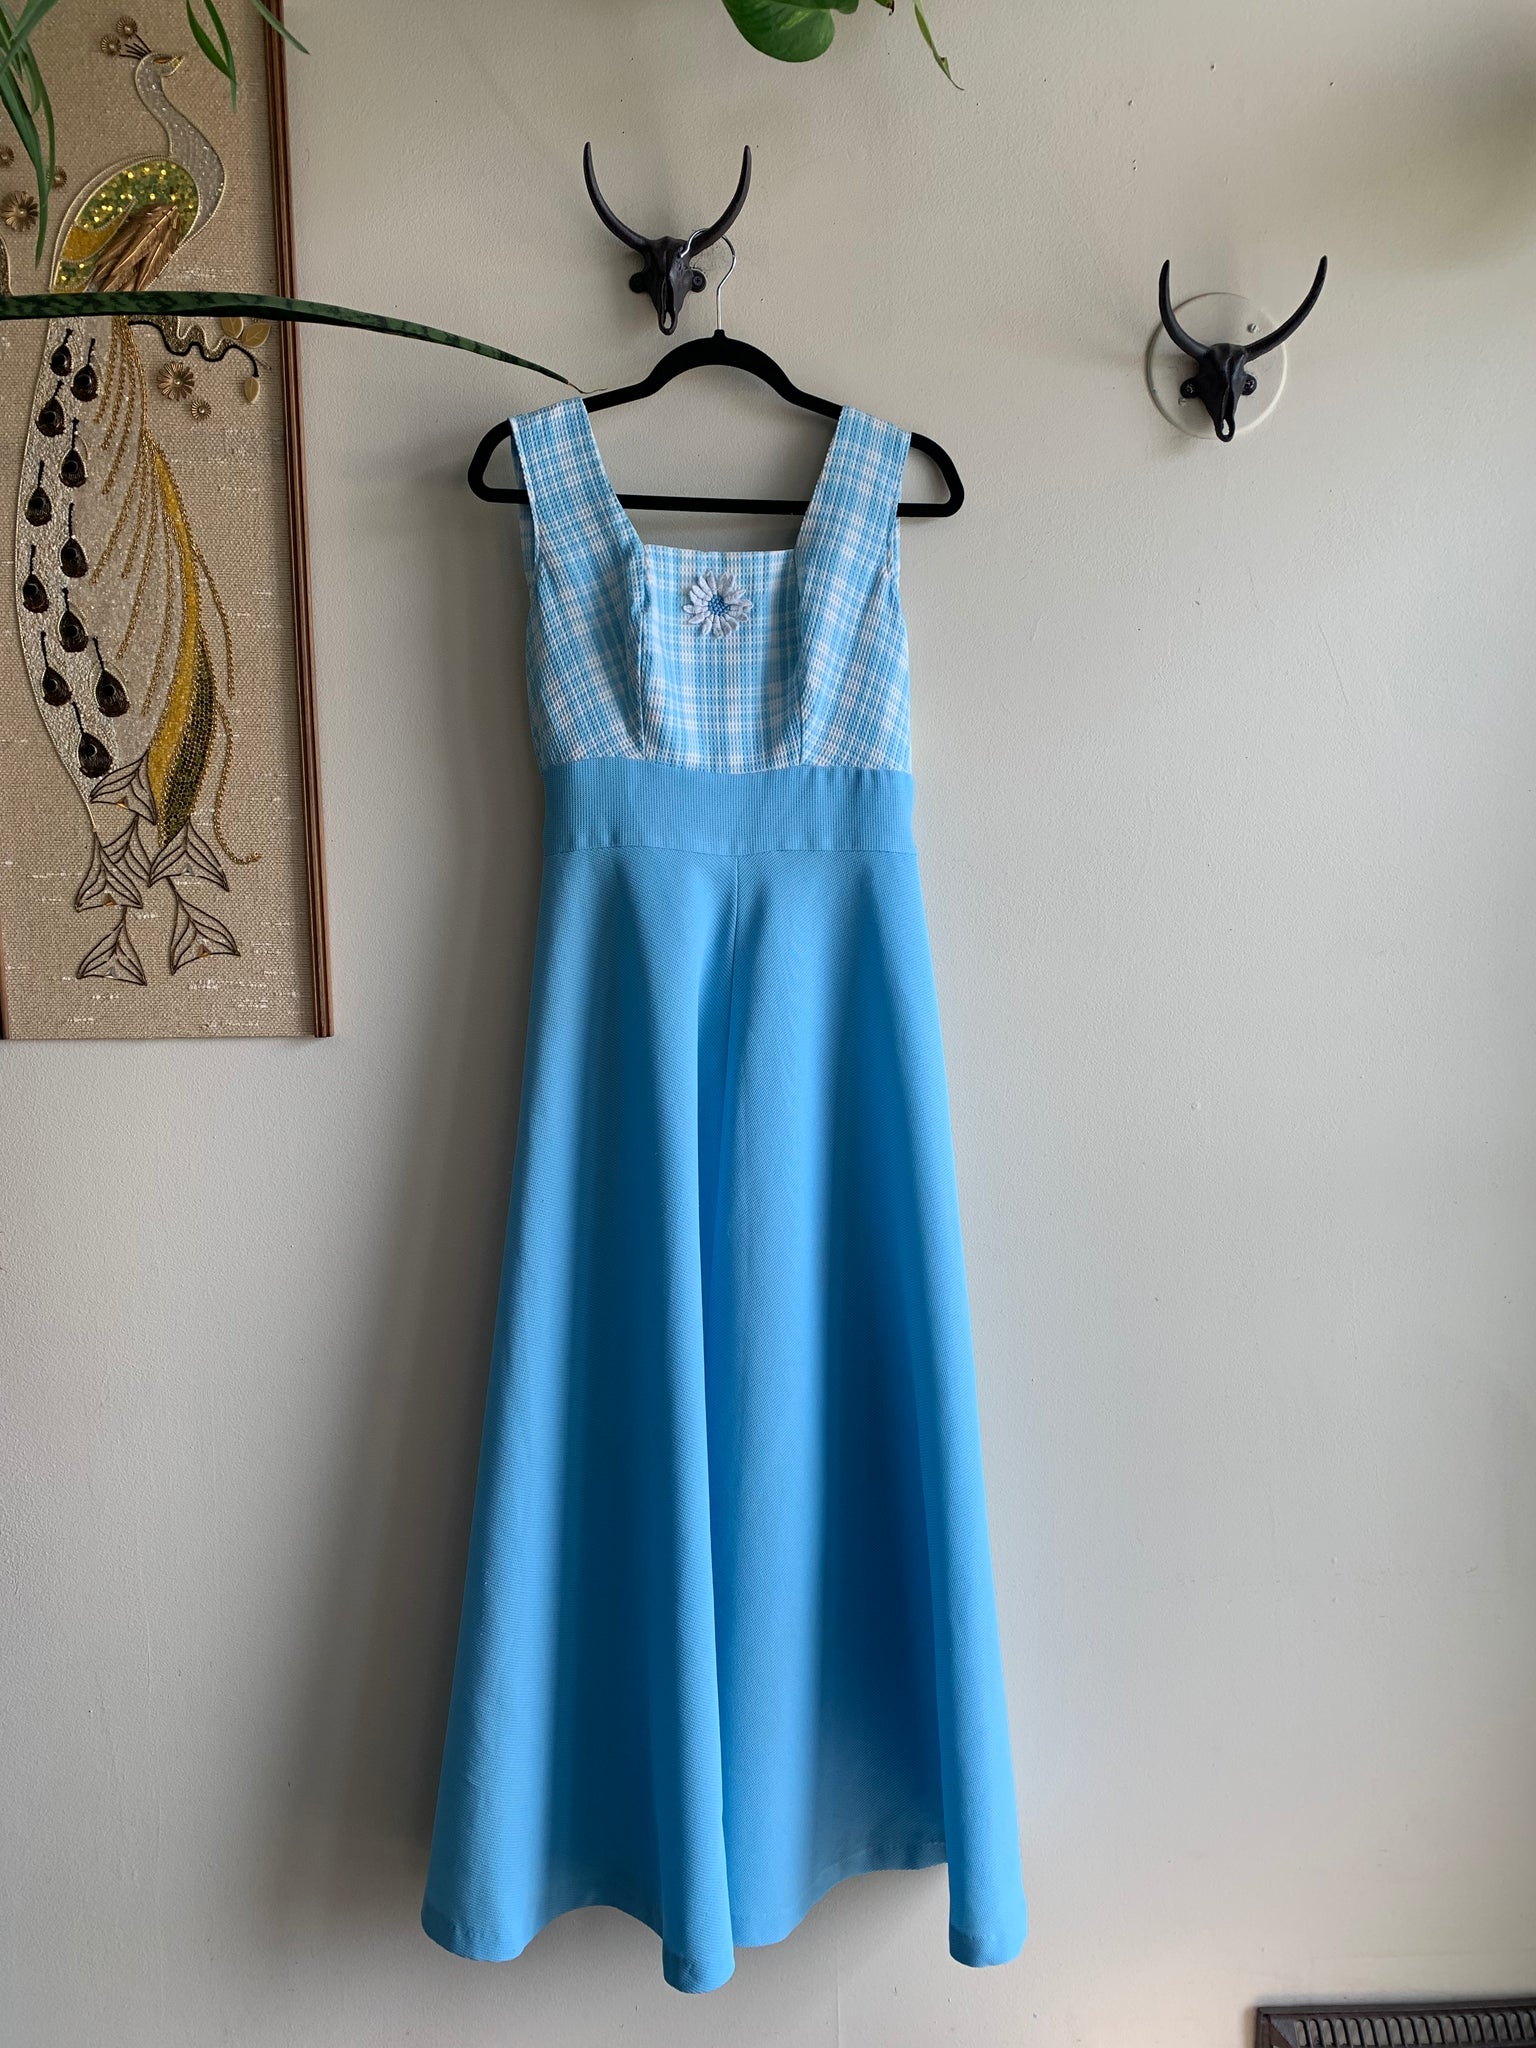 Dreamy Handmade Blue Dress - M